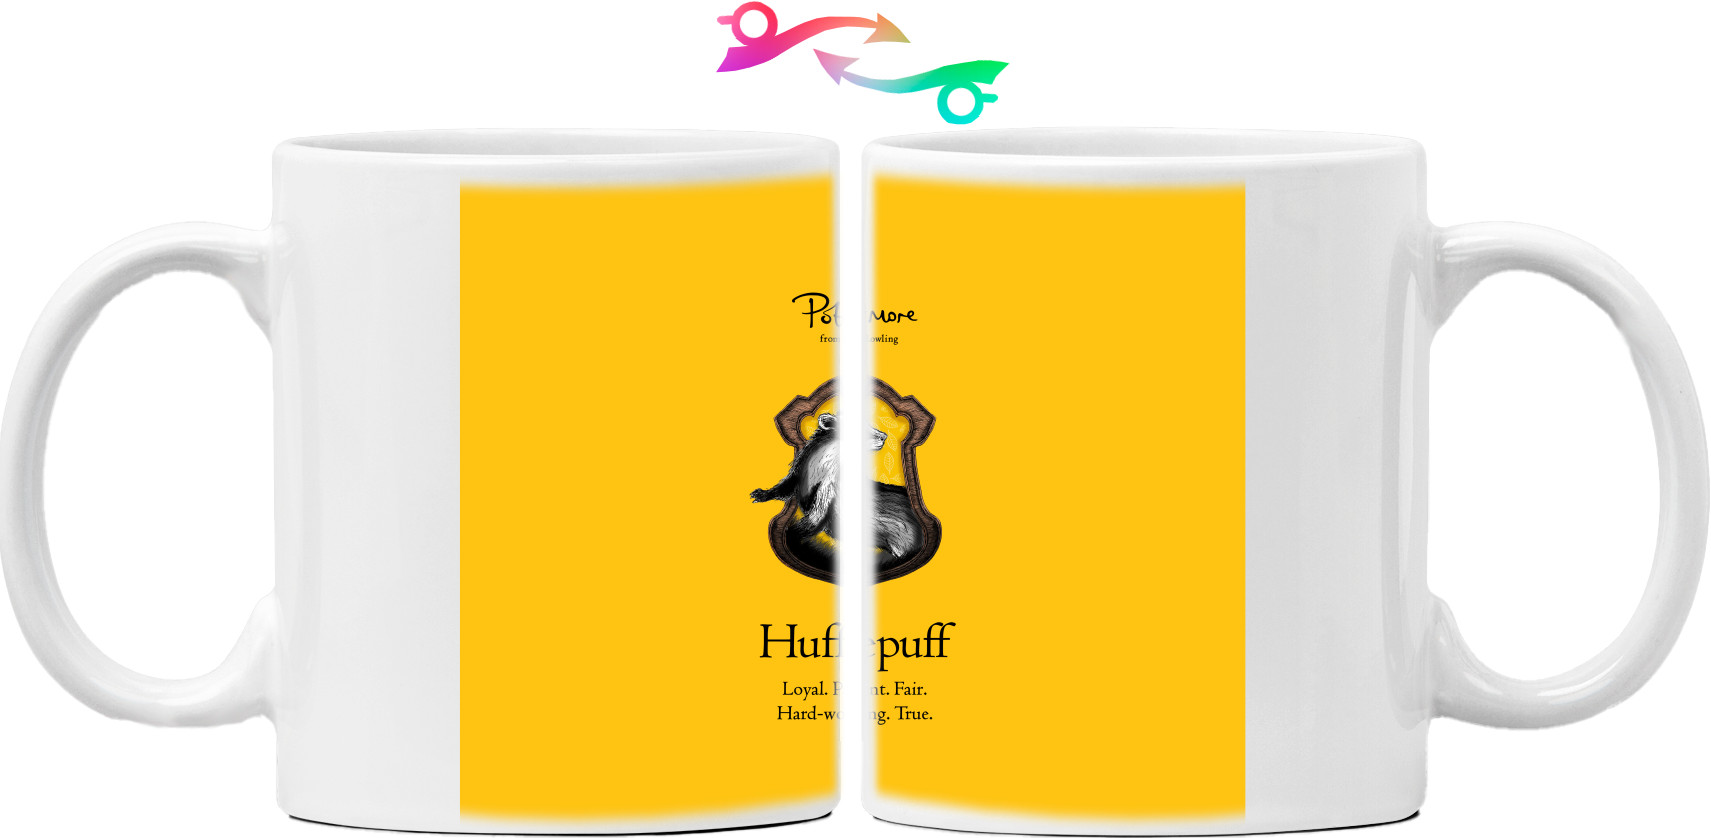 Hufflepuff